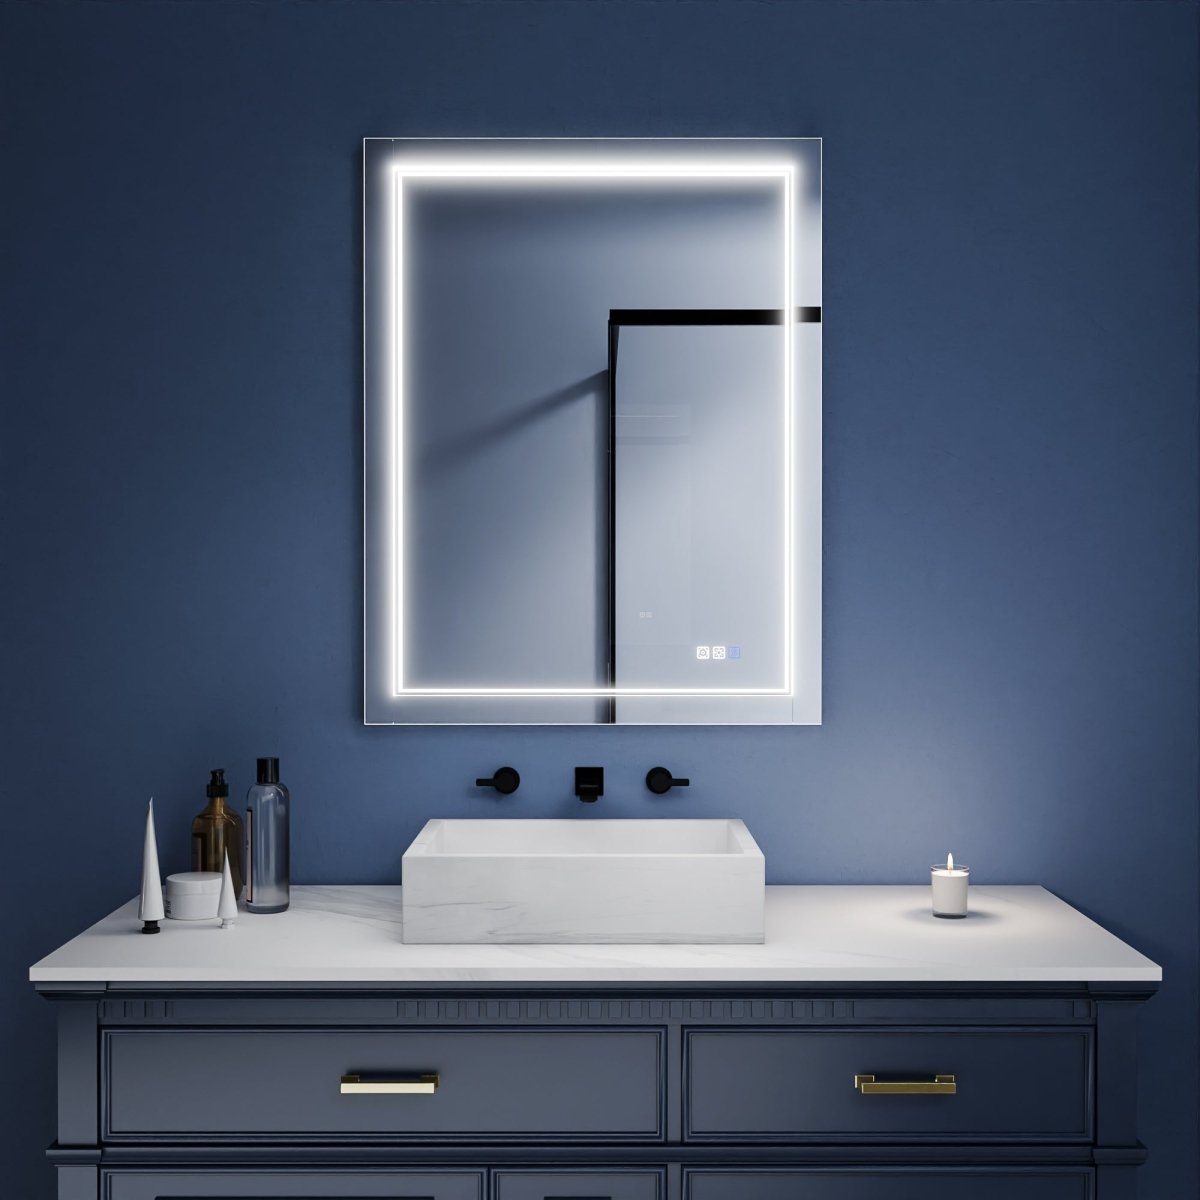 Ascend - M1d 28" x 36" Led Bathroom Mirror with Aluminum Frame